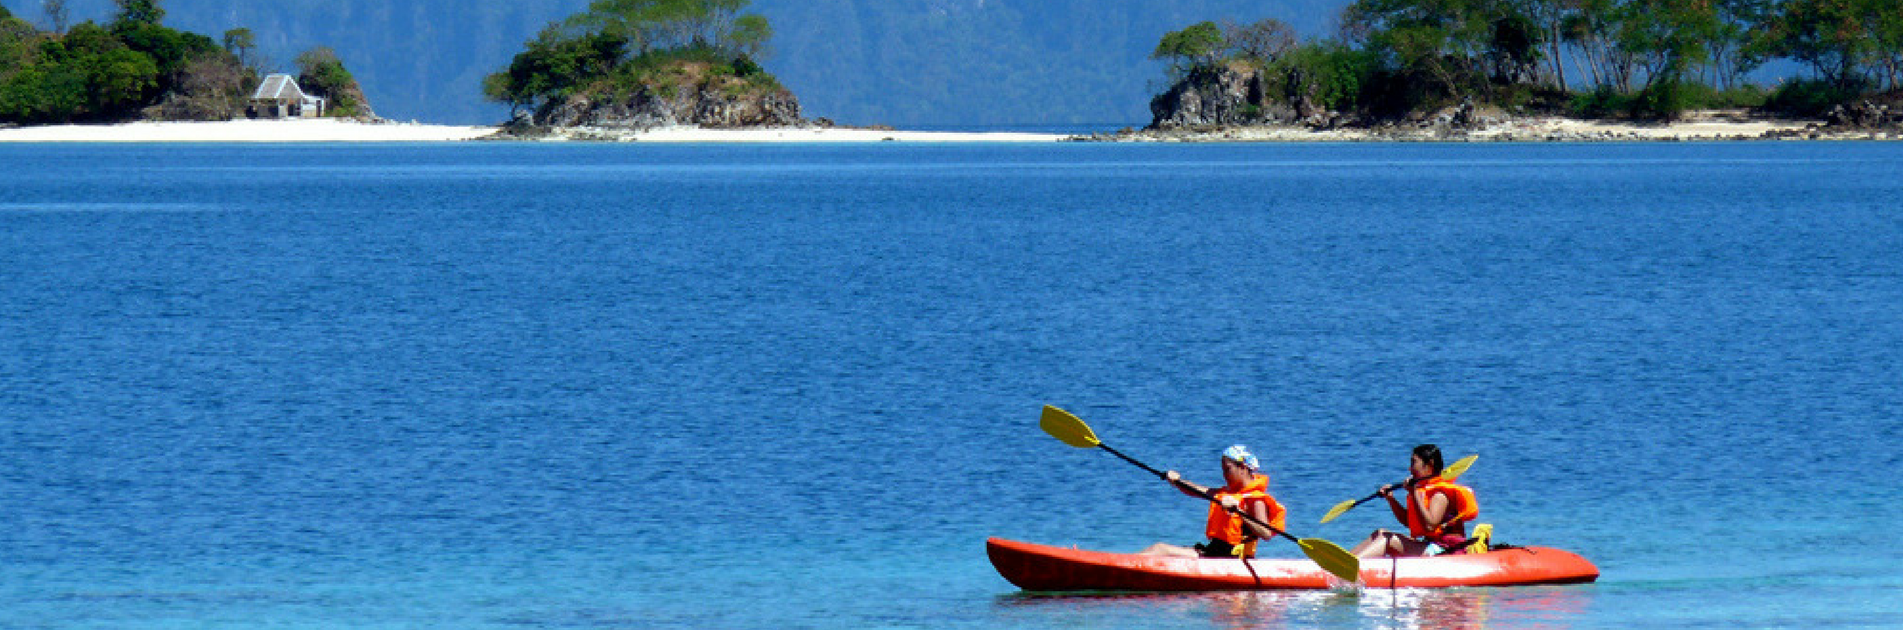 Kayaking at Coron Island, Philippines